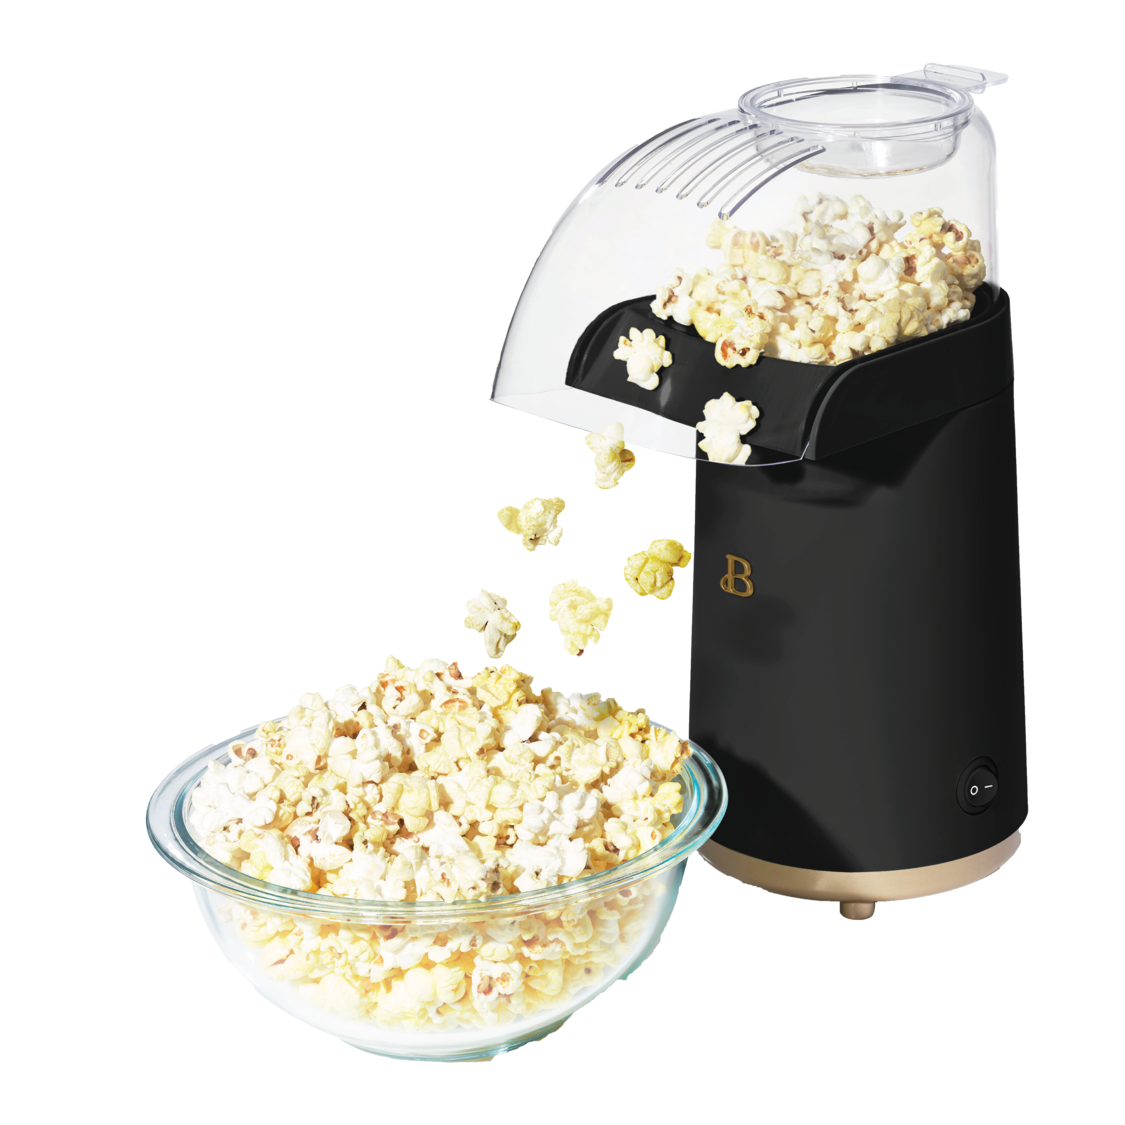  BELLA 14604 Hot Air Popcorn Popper Maker, Red,: Home & Kitchen